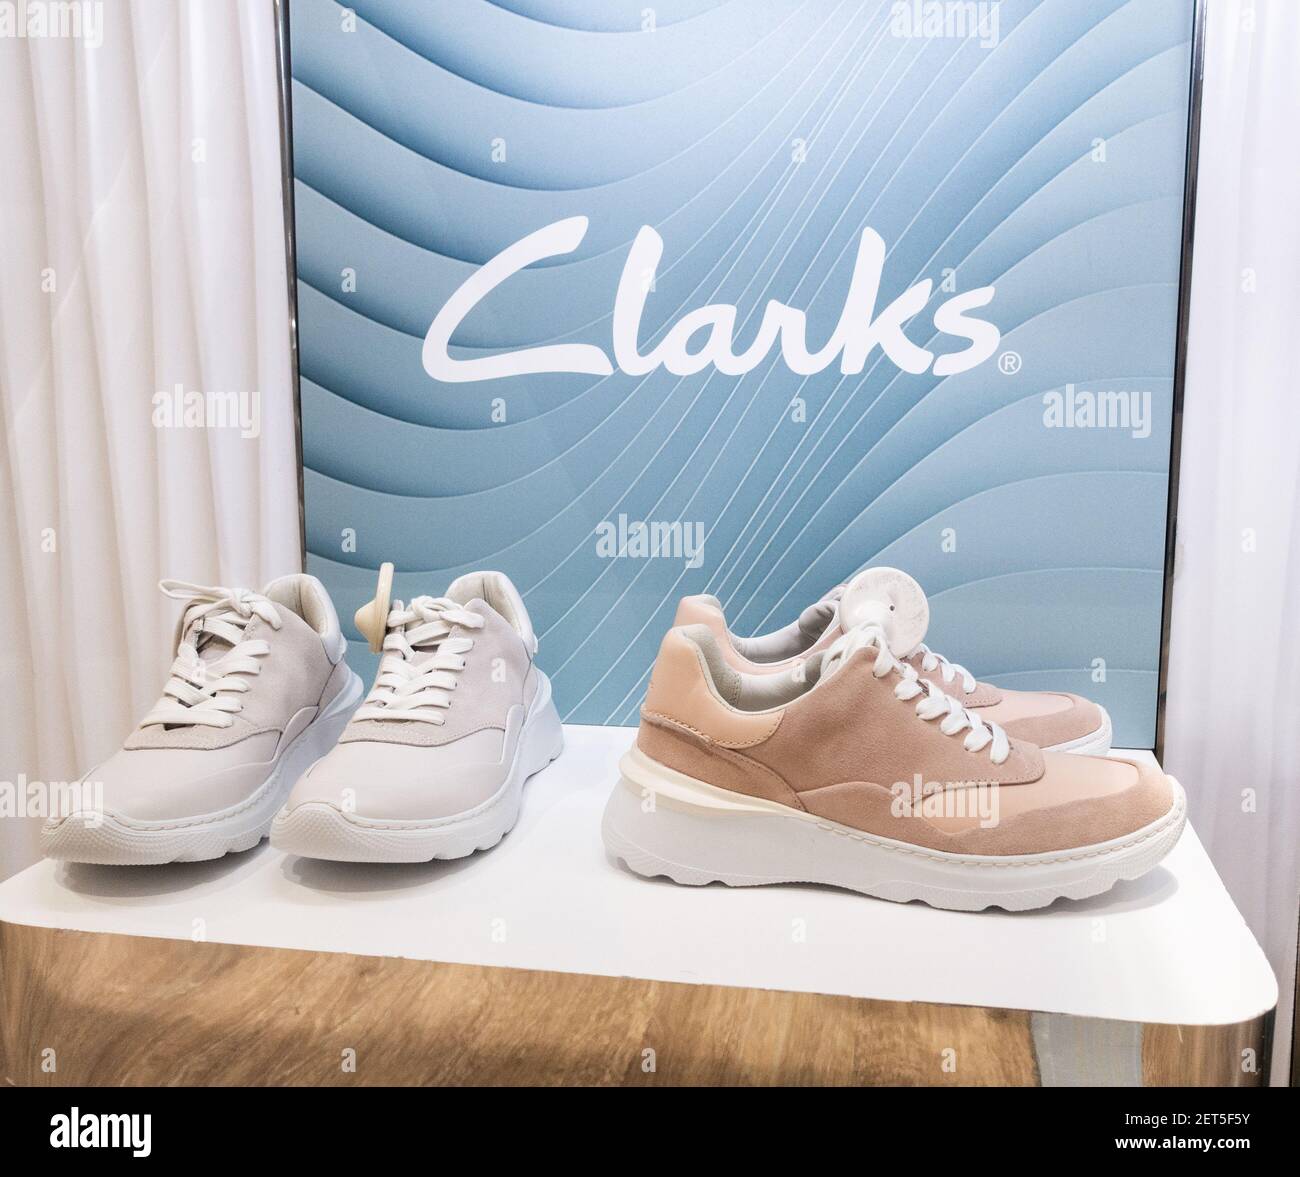 shoes display e imágenes de alta resolución Alamy